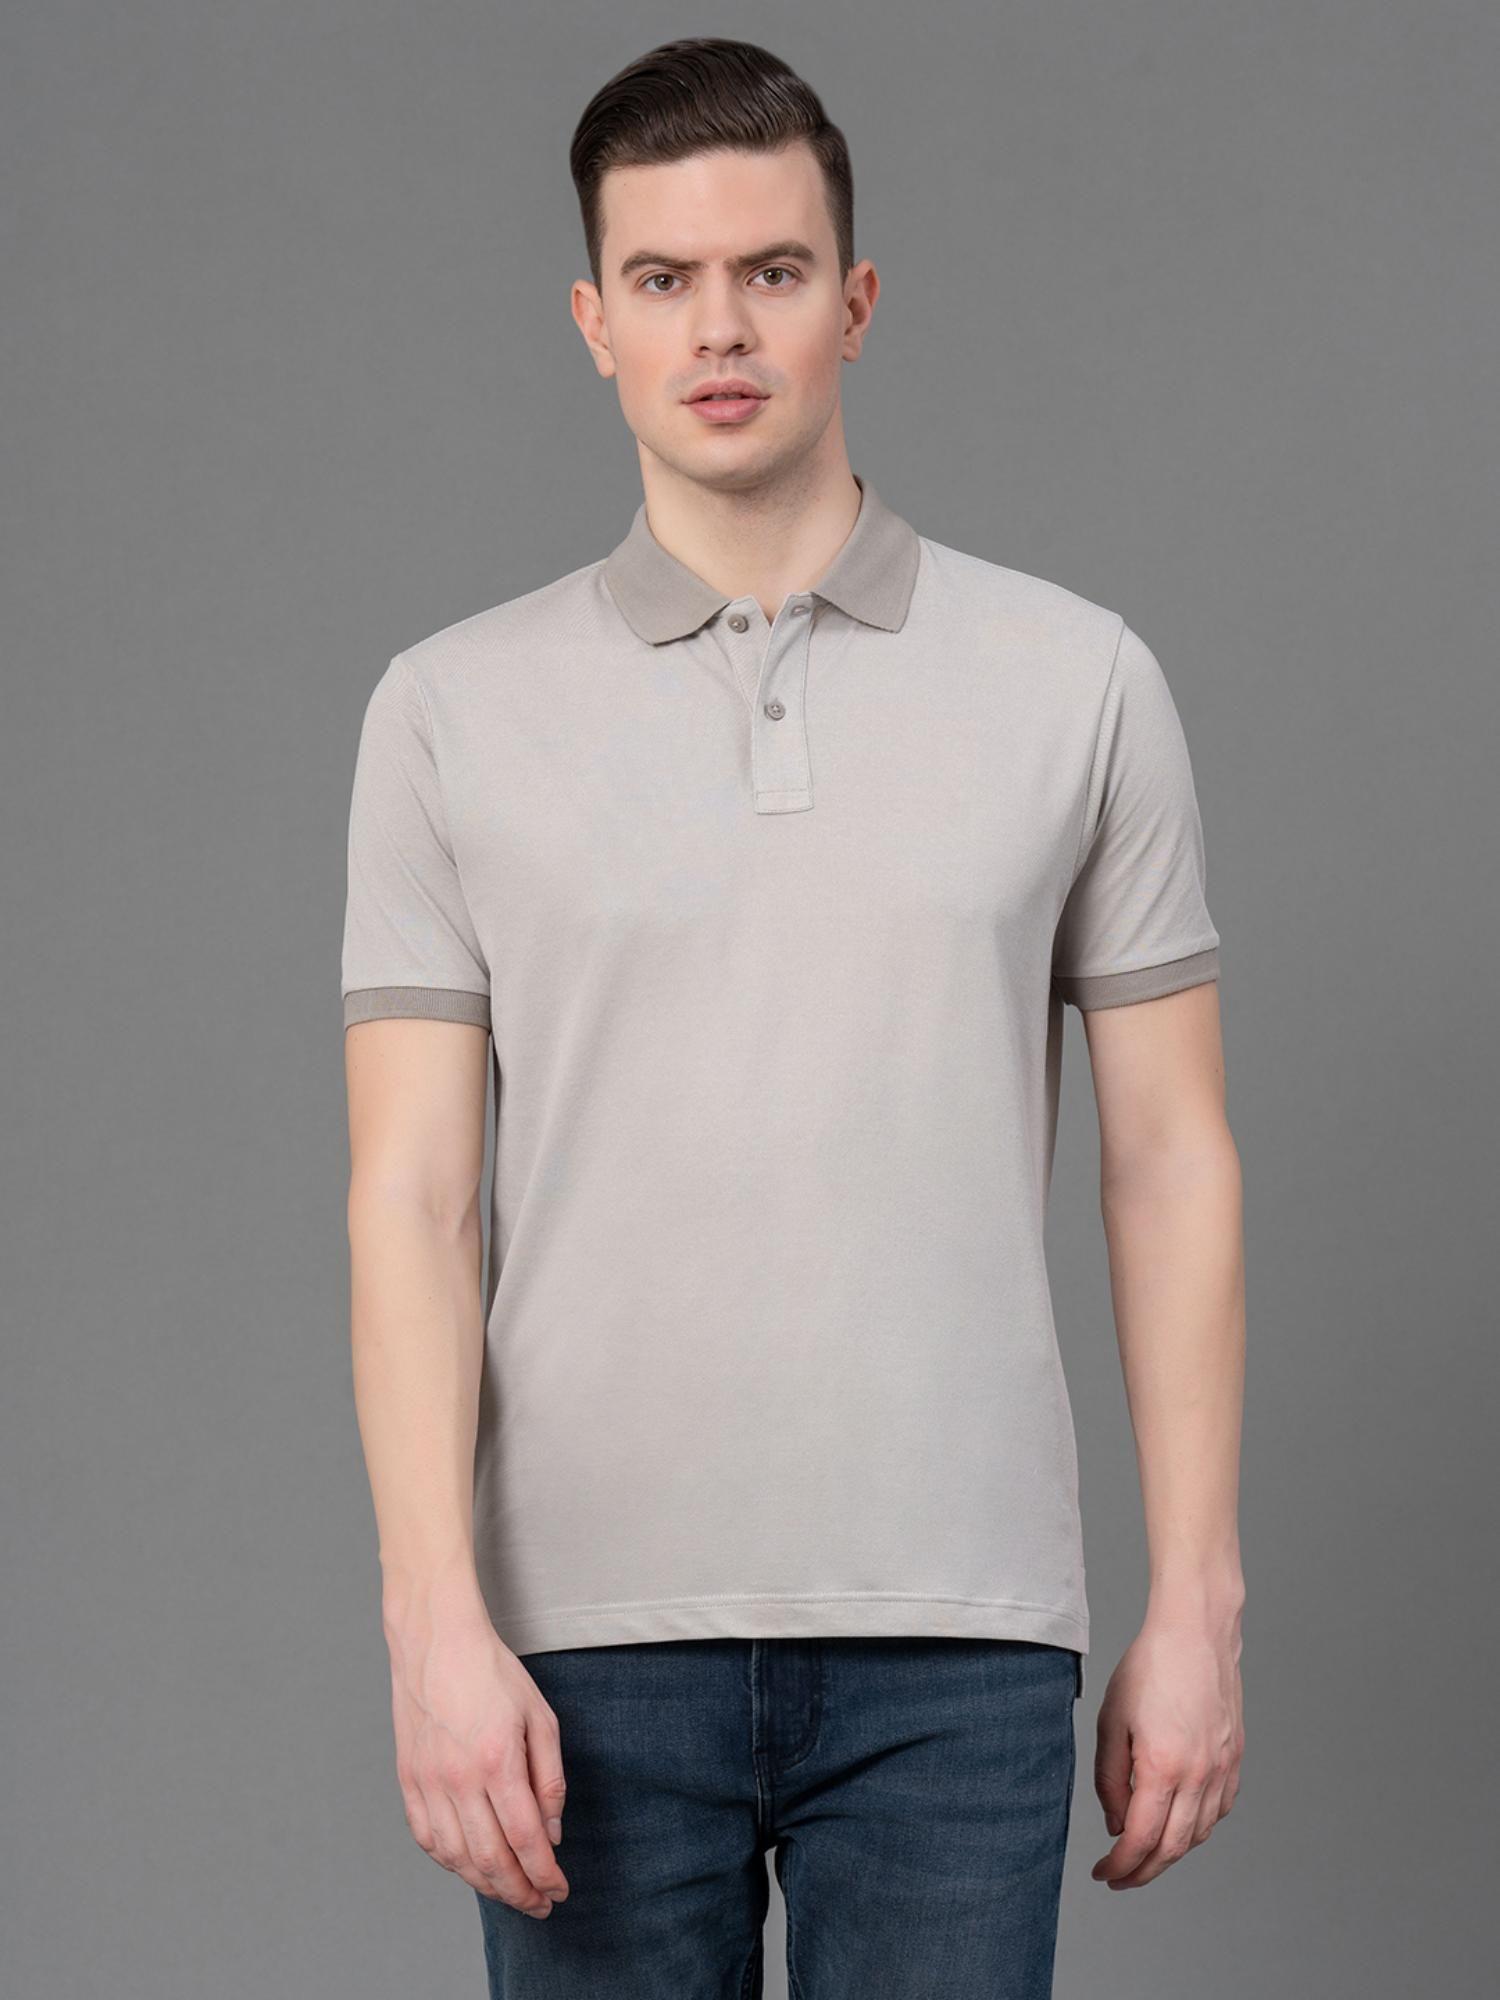 grey melange poly cotton self design mens polo t-shirt